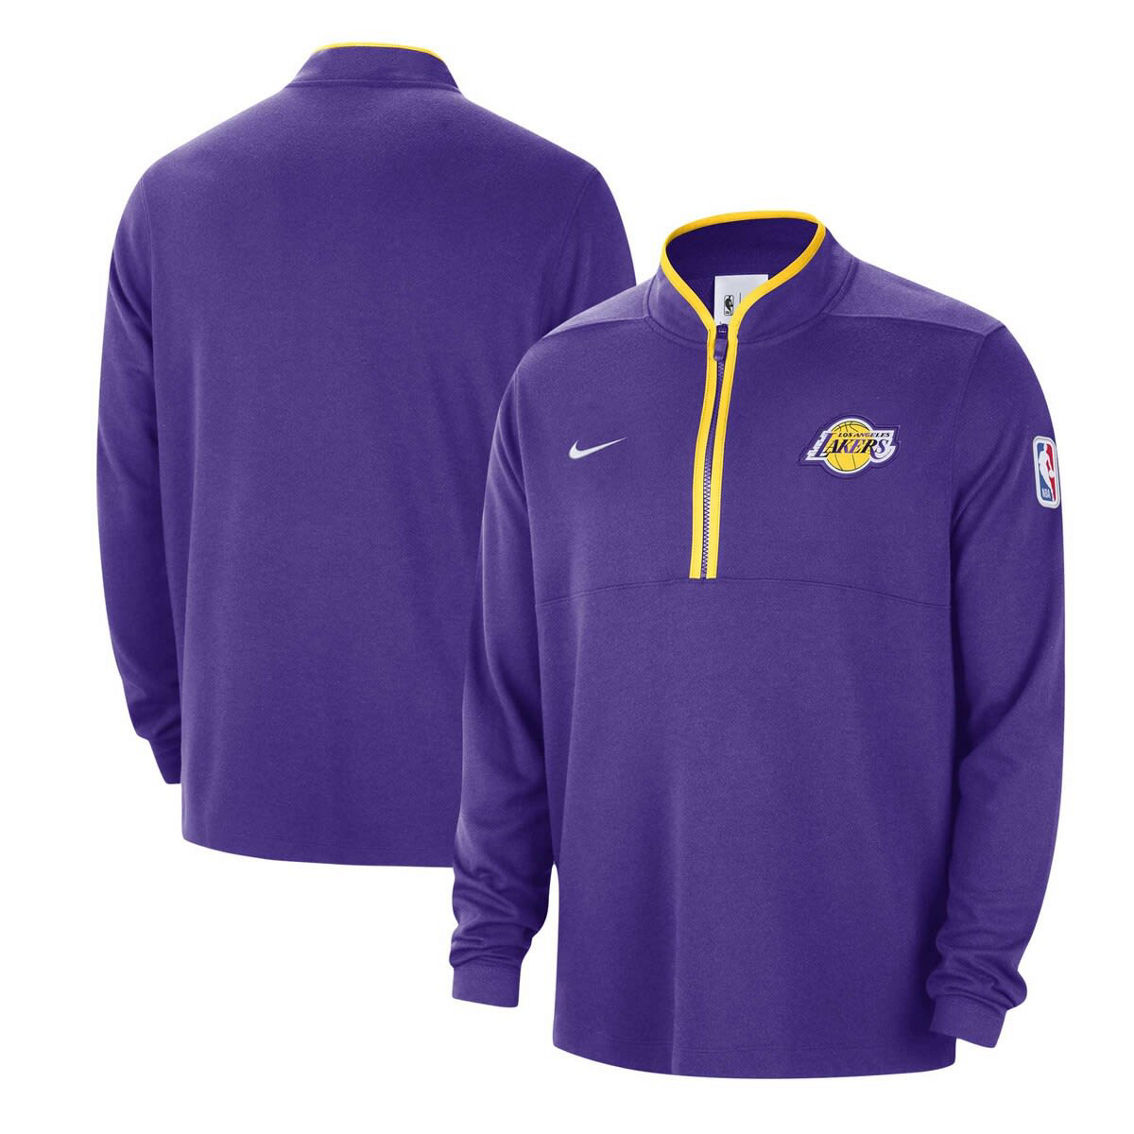 Nike Men's Purple Los Angeles Lakers Authentic Performance Half-Zip Jacket - Image 2 of 4